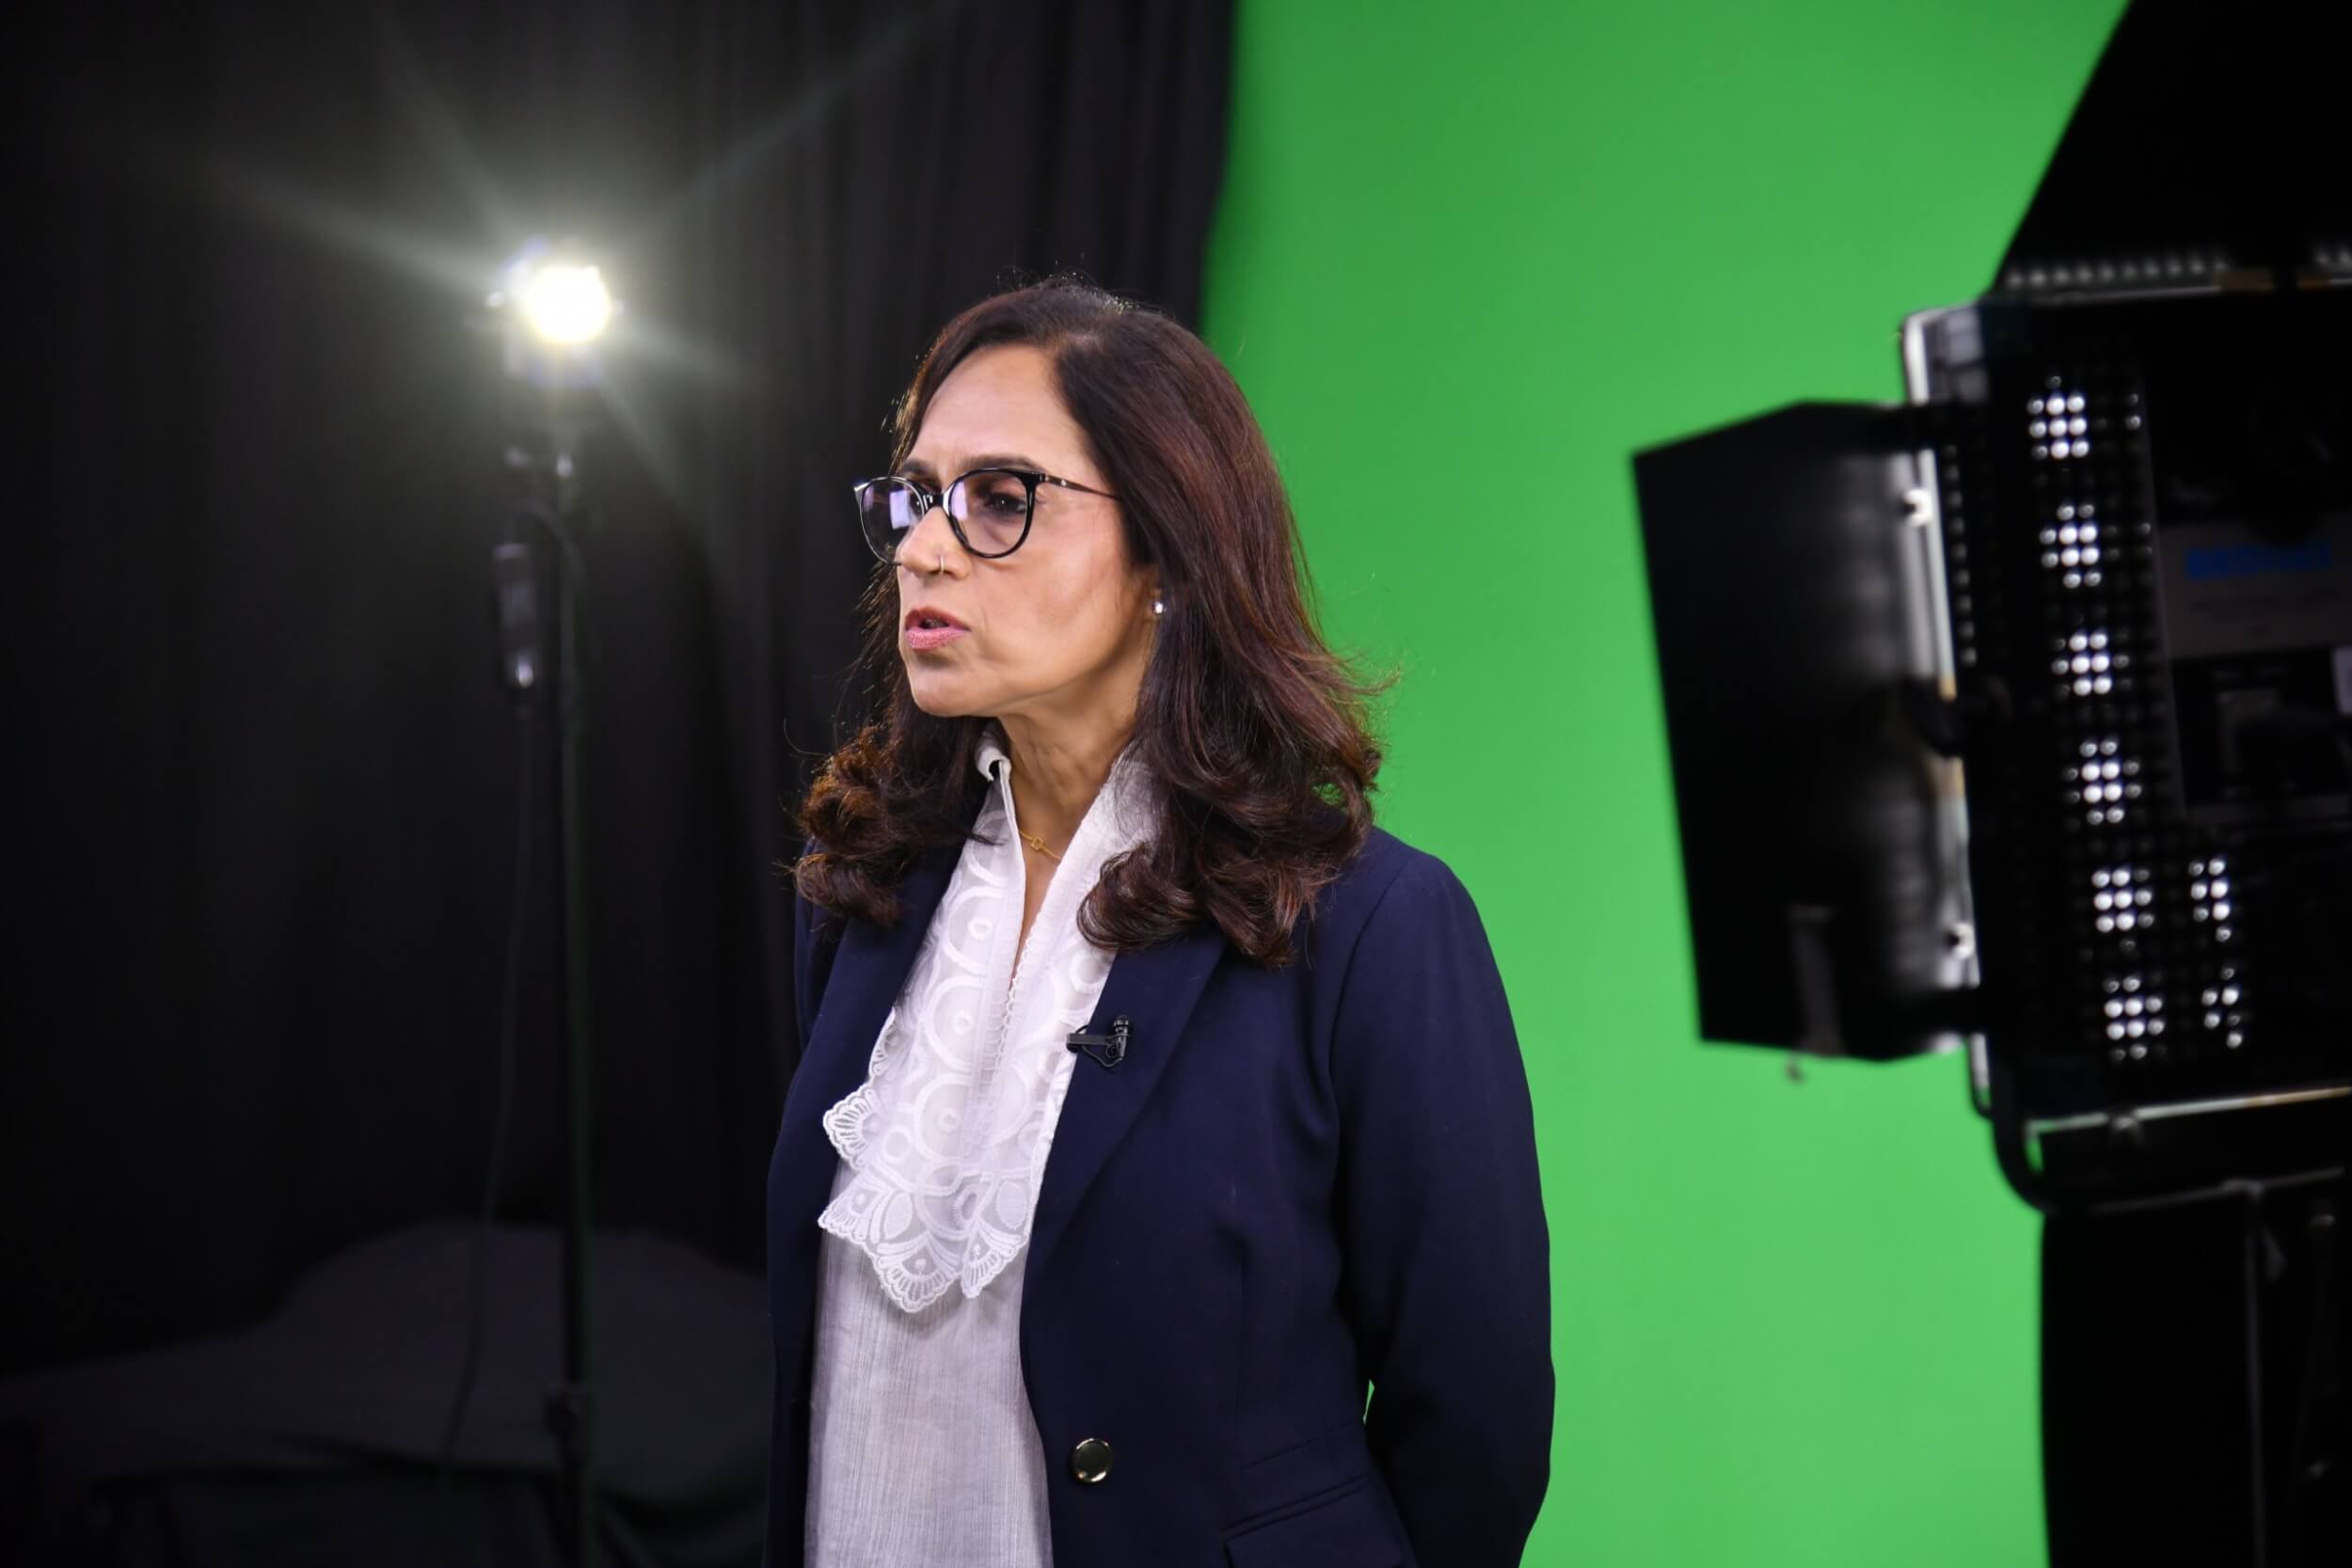 Ritu Kapur recording a video.